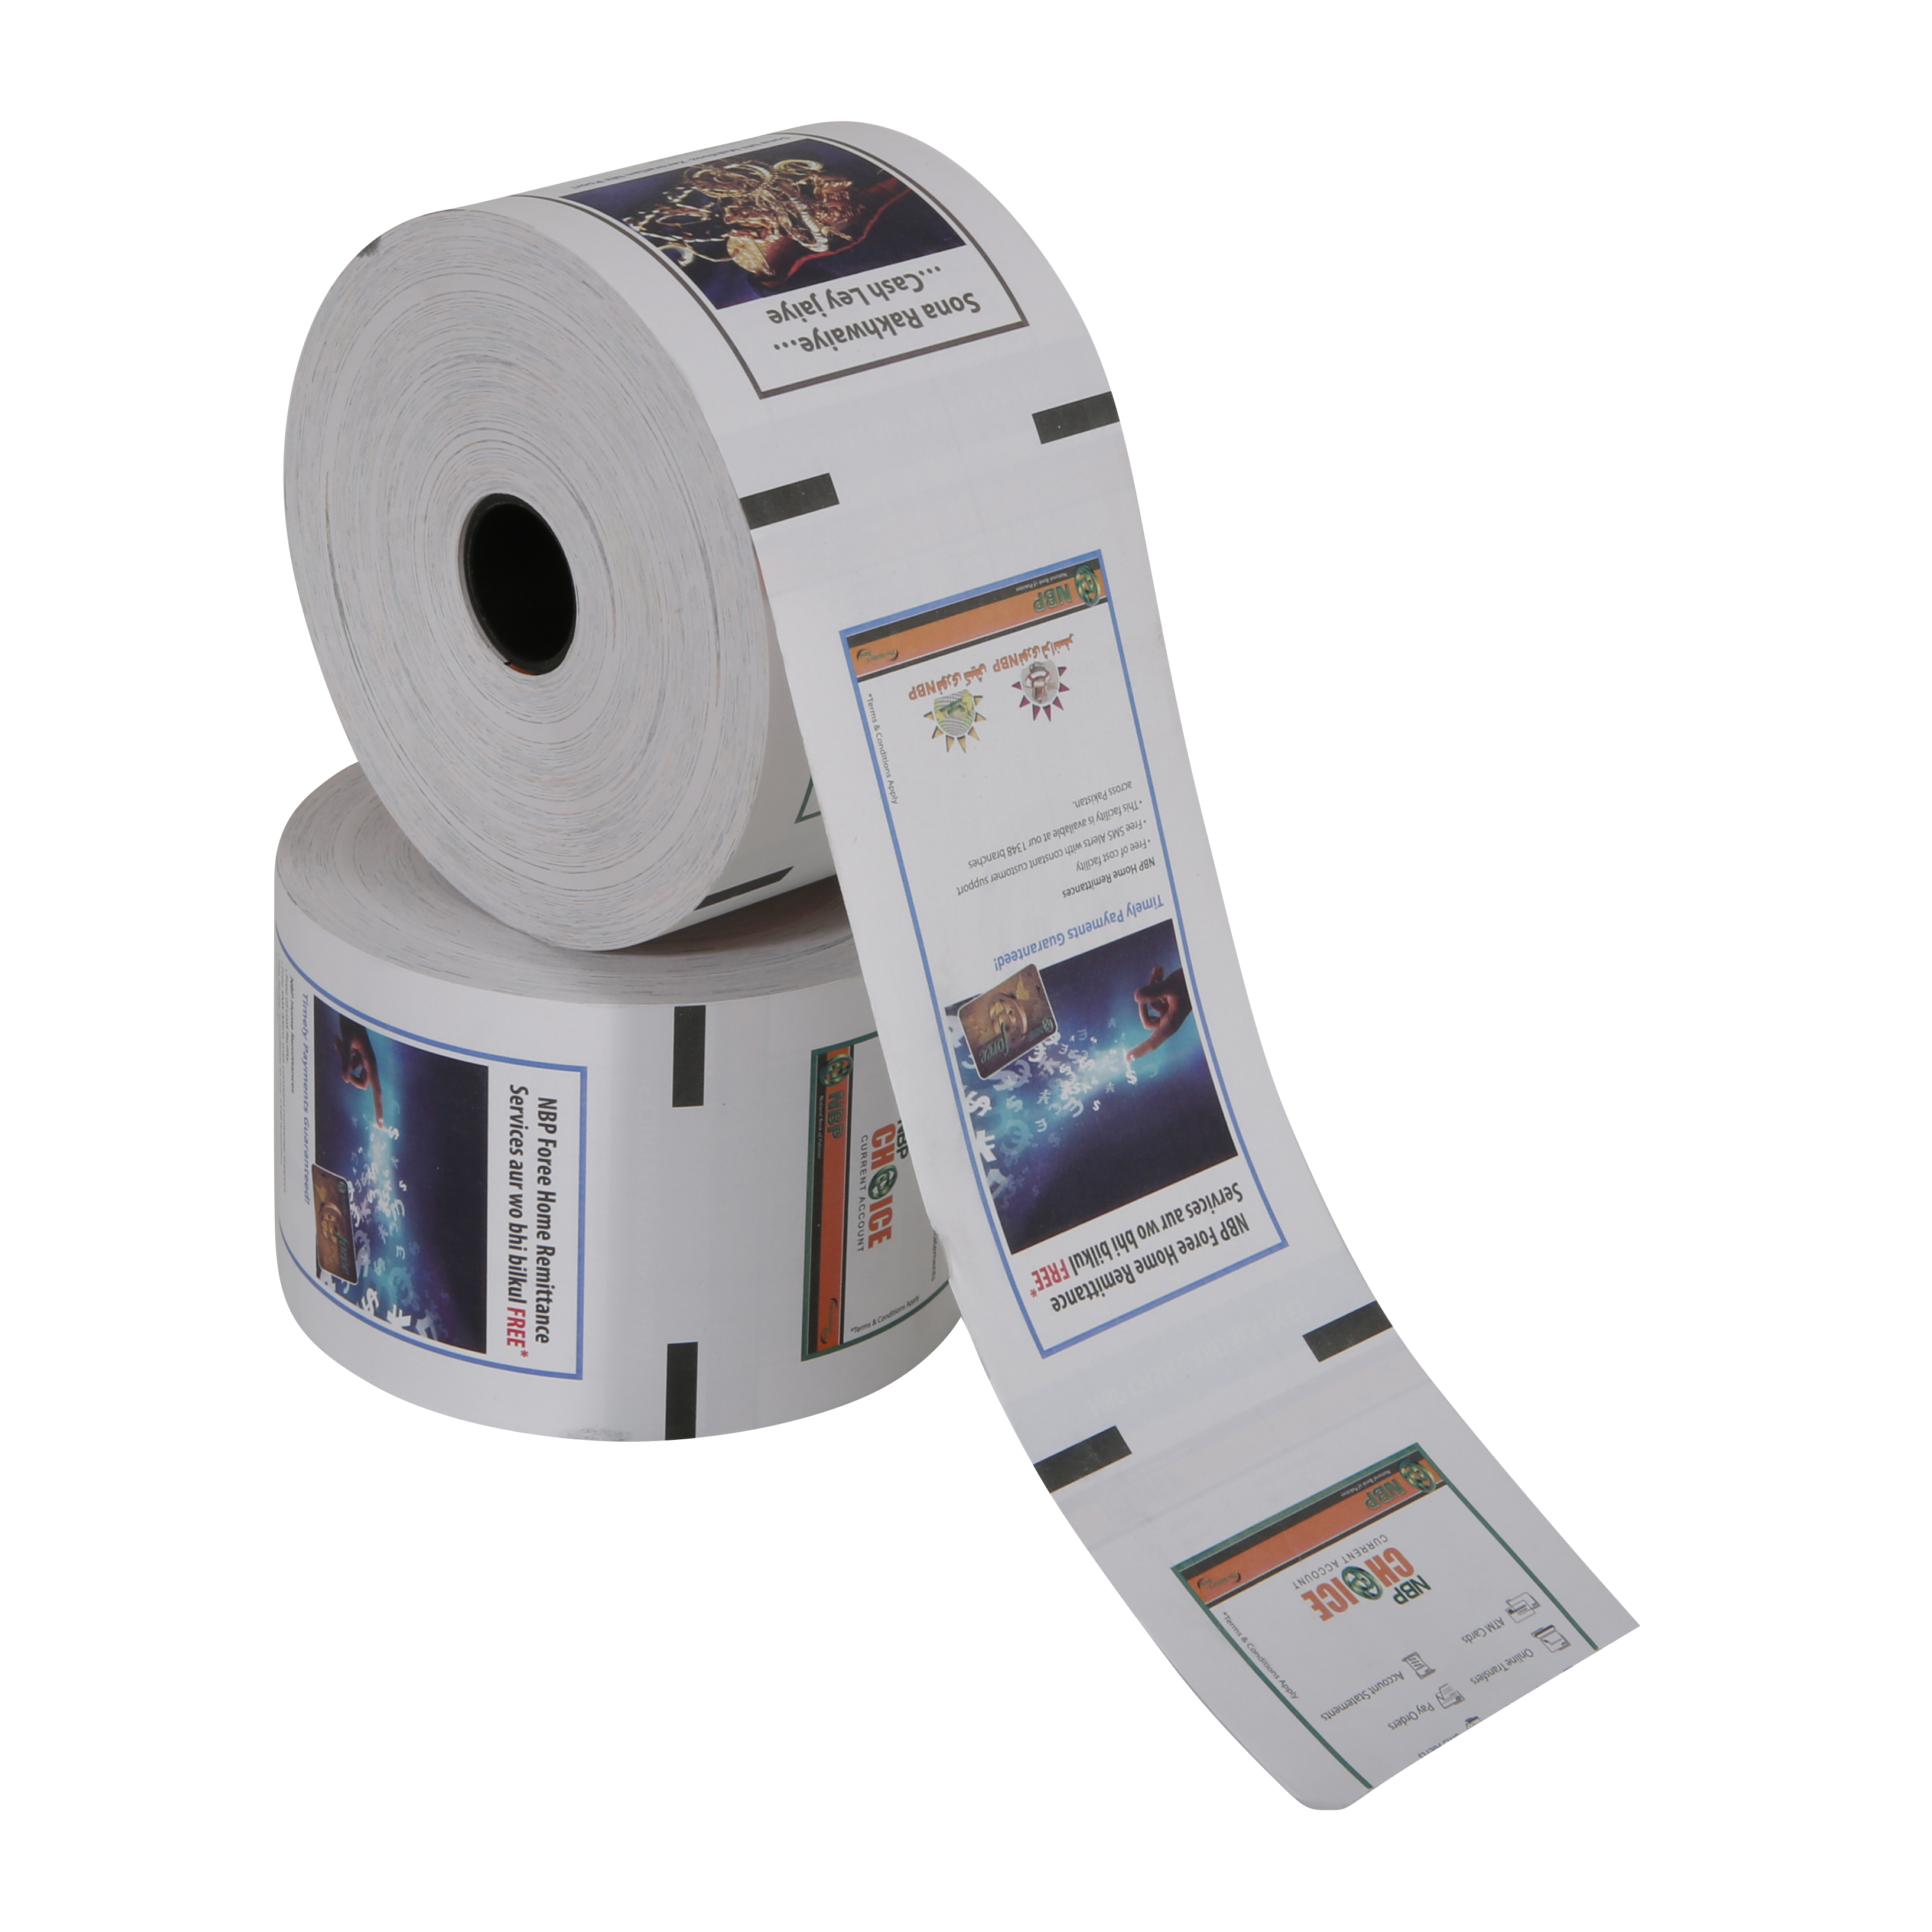 Naka-print na 80 x 80mm atm receipt roll cash register thermal paper